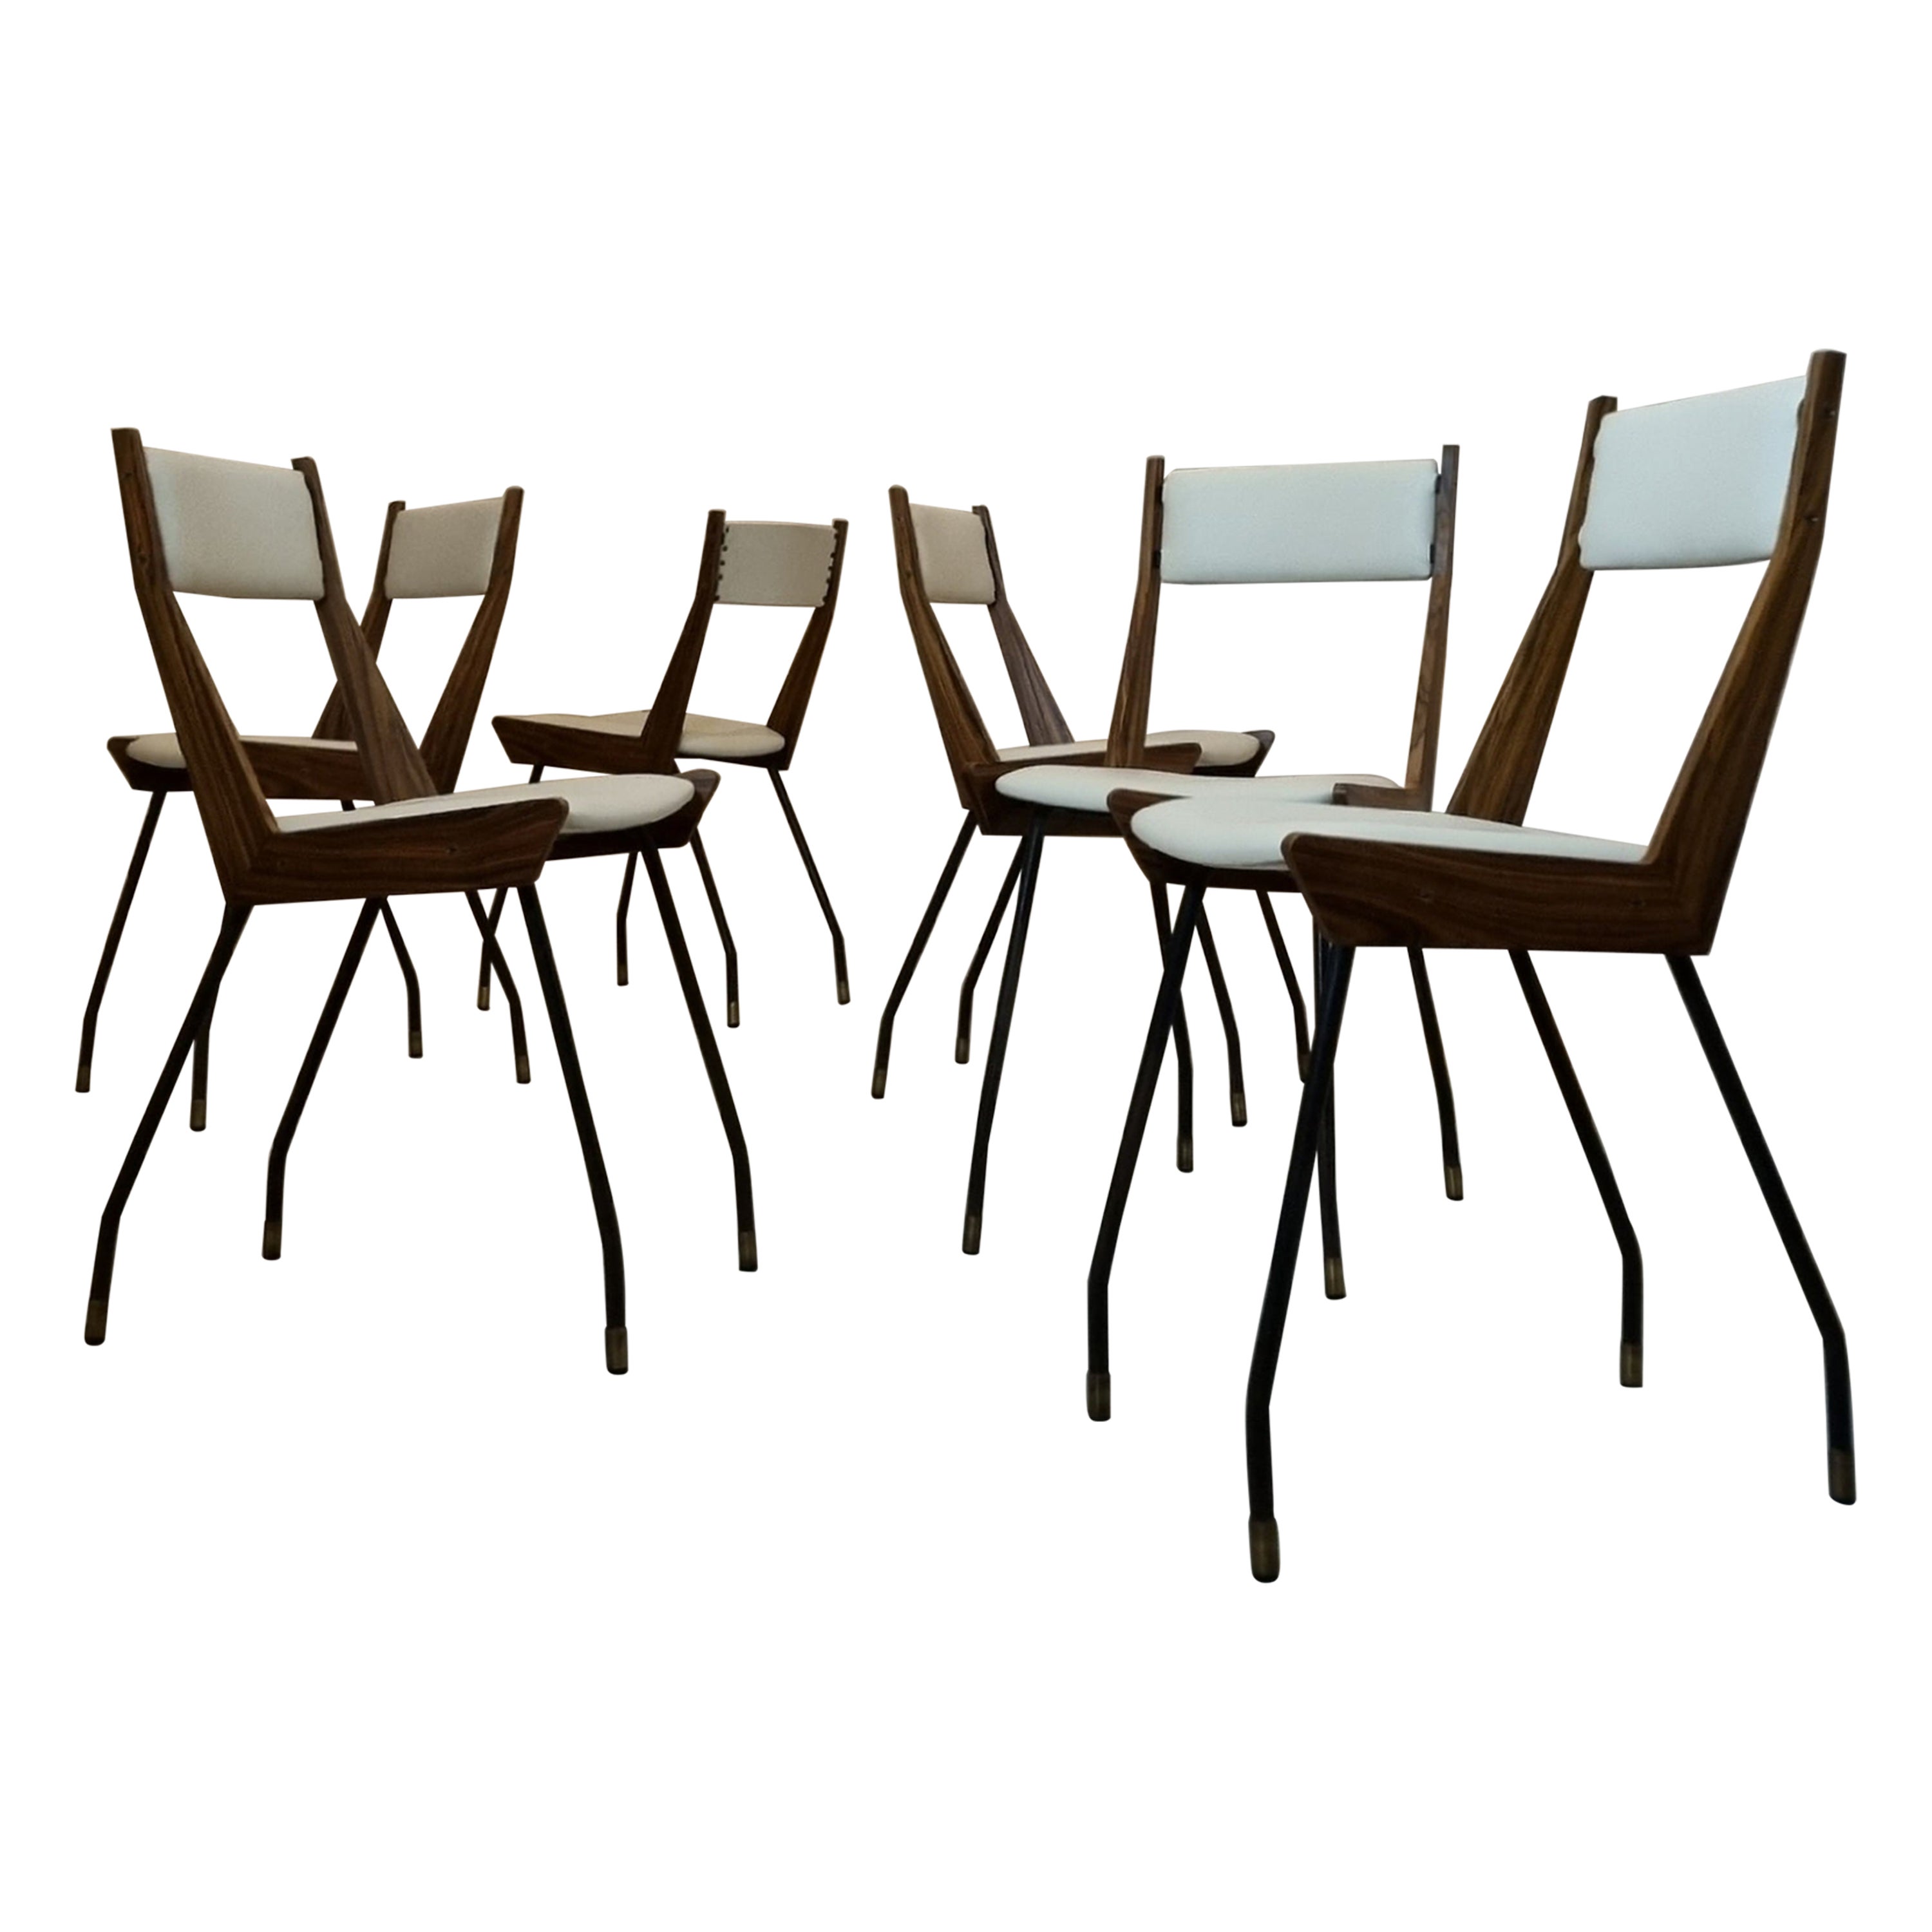 Set of 6 Chairs by Carlo Ratti for Industria Compensati Curvati 50s For Sale